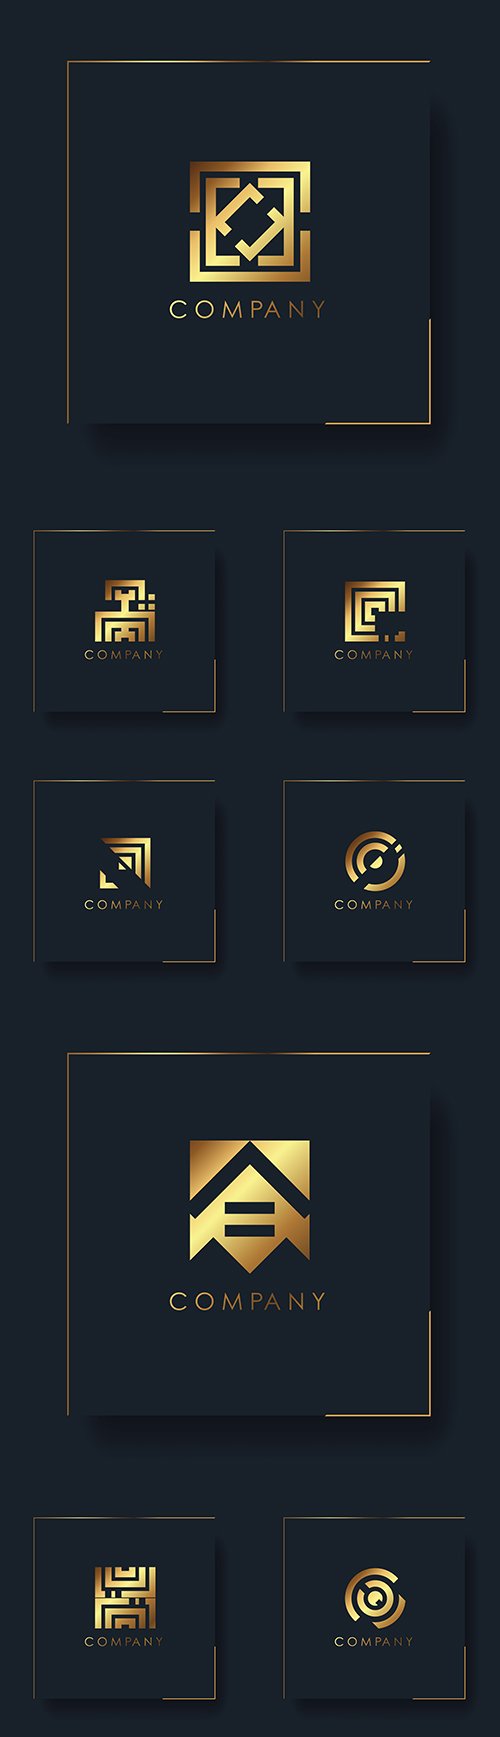 Abstract gold geometric logo company design